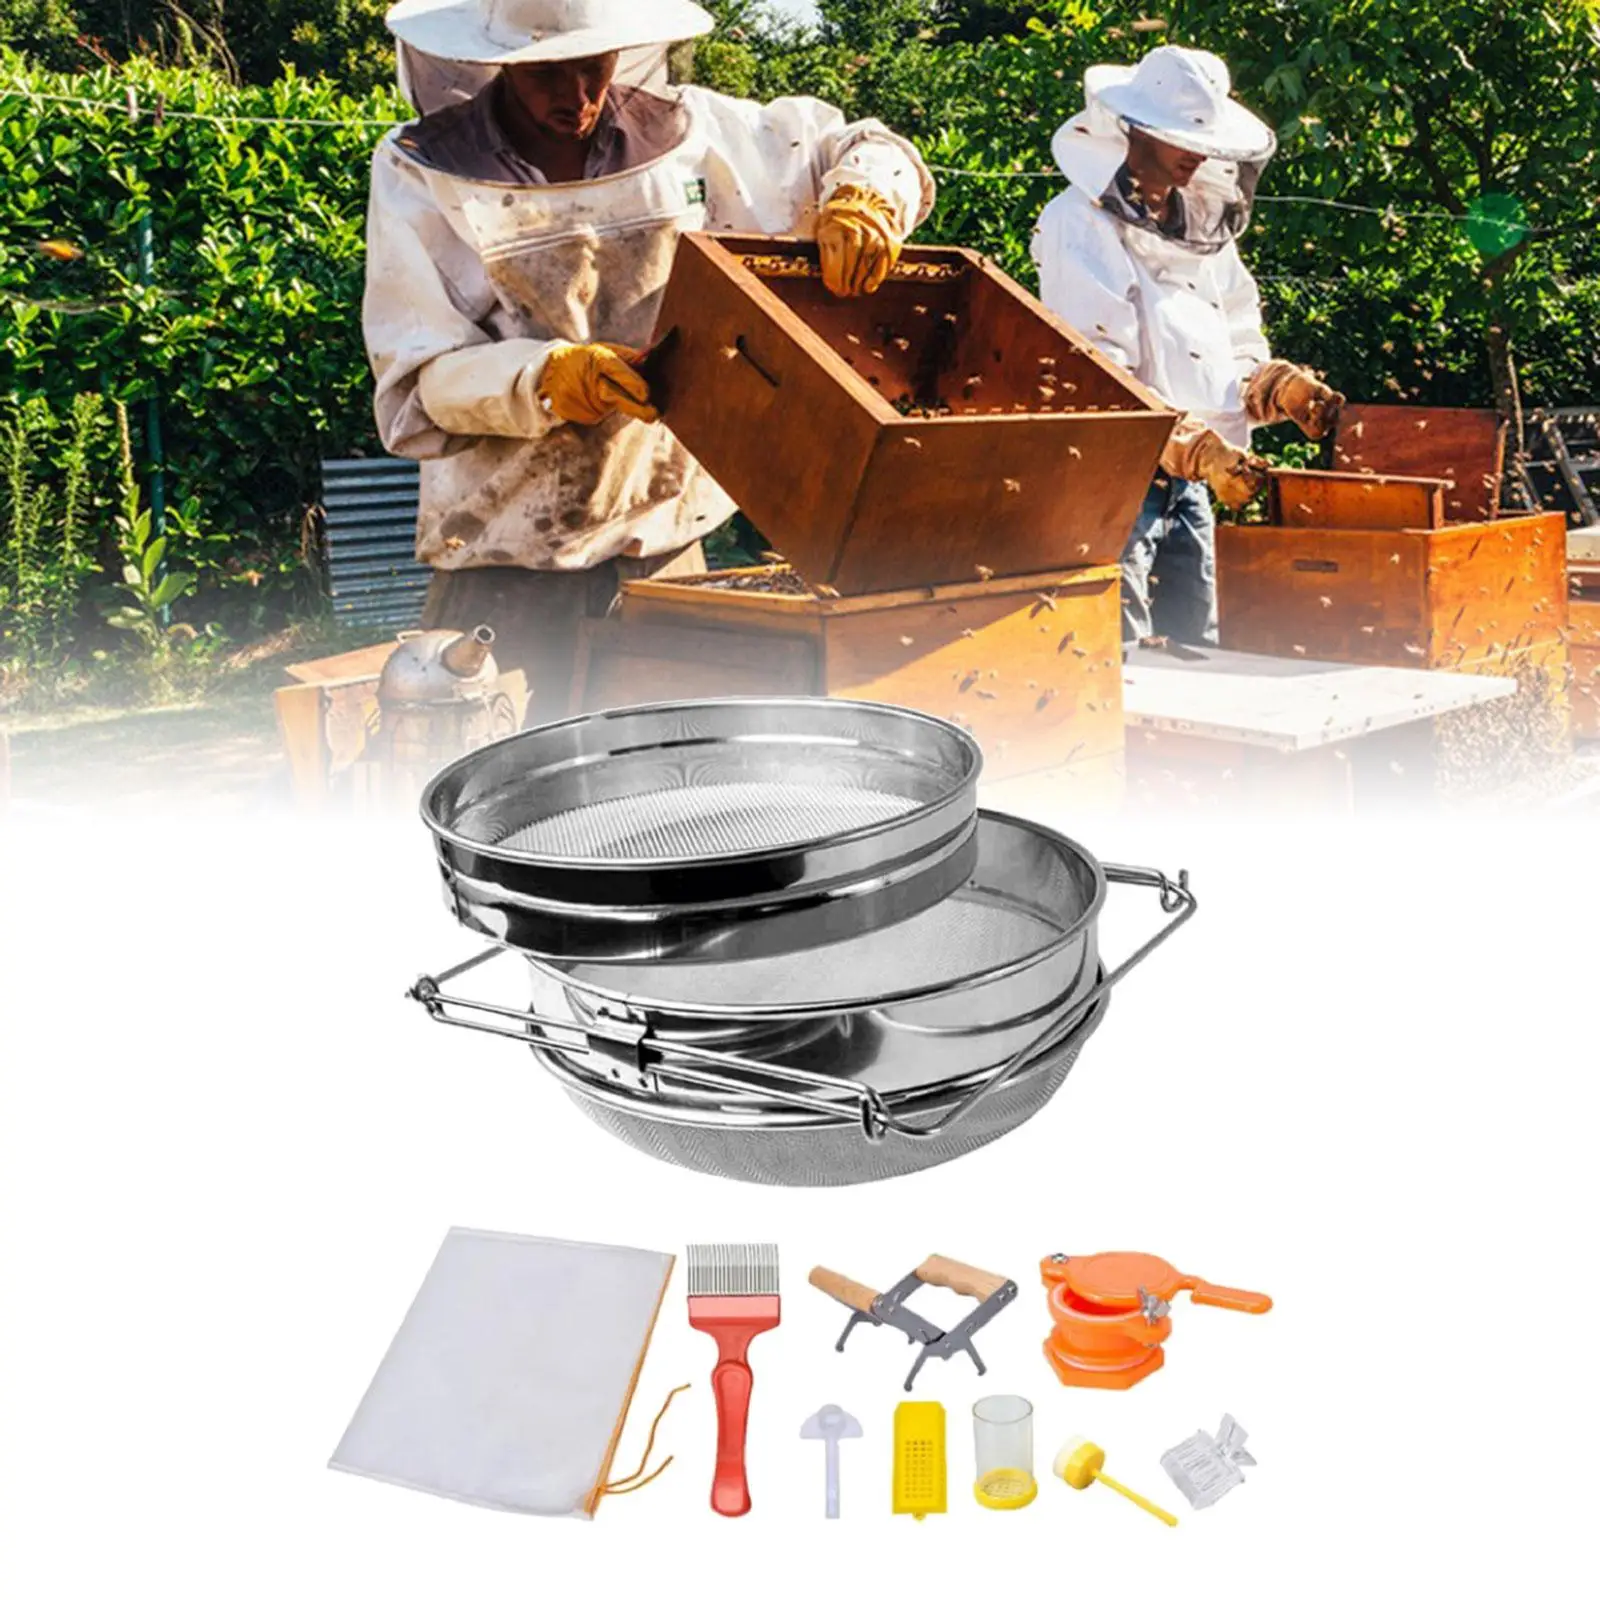 9x Beekeeping Set Stainless Steel Filter Net Beekeeping Equipment Supplies for Farm Beginners Professionals Beekeepers